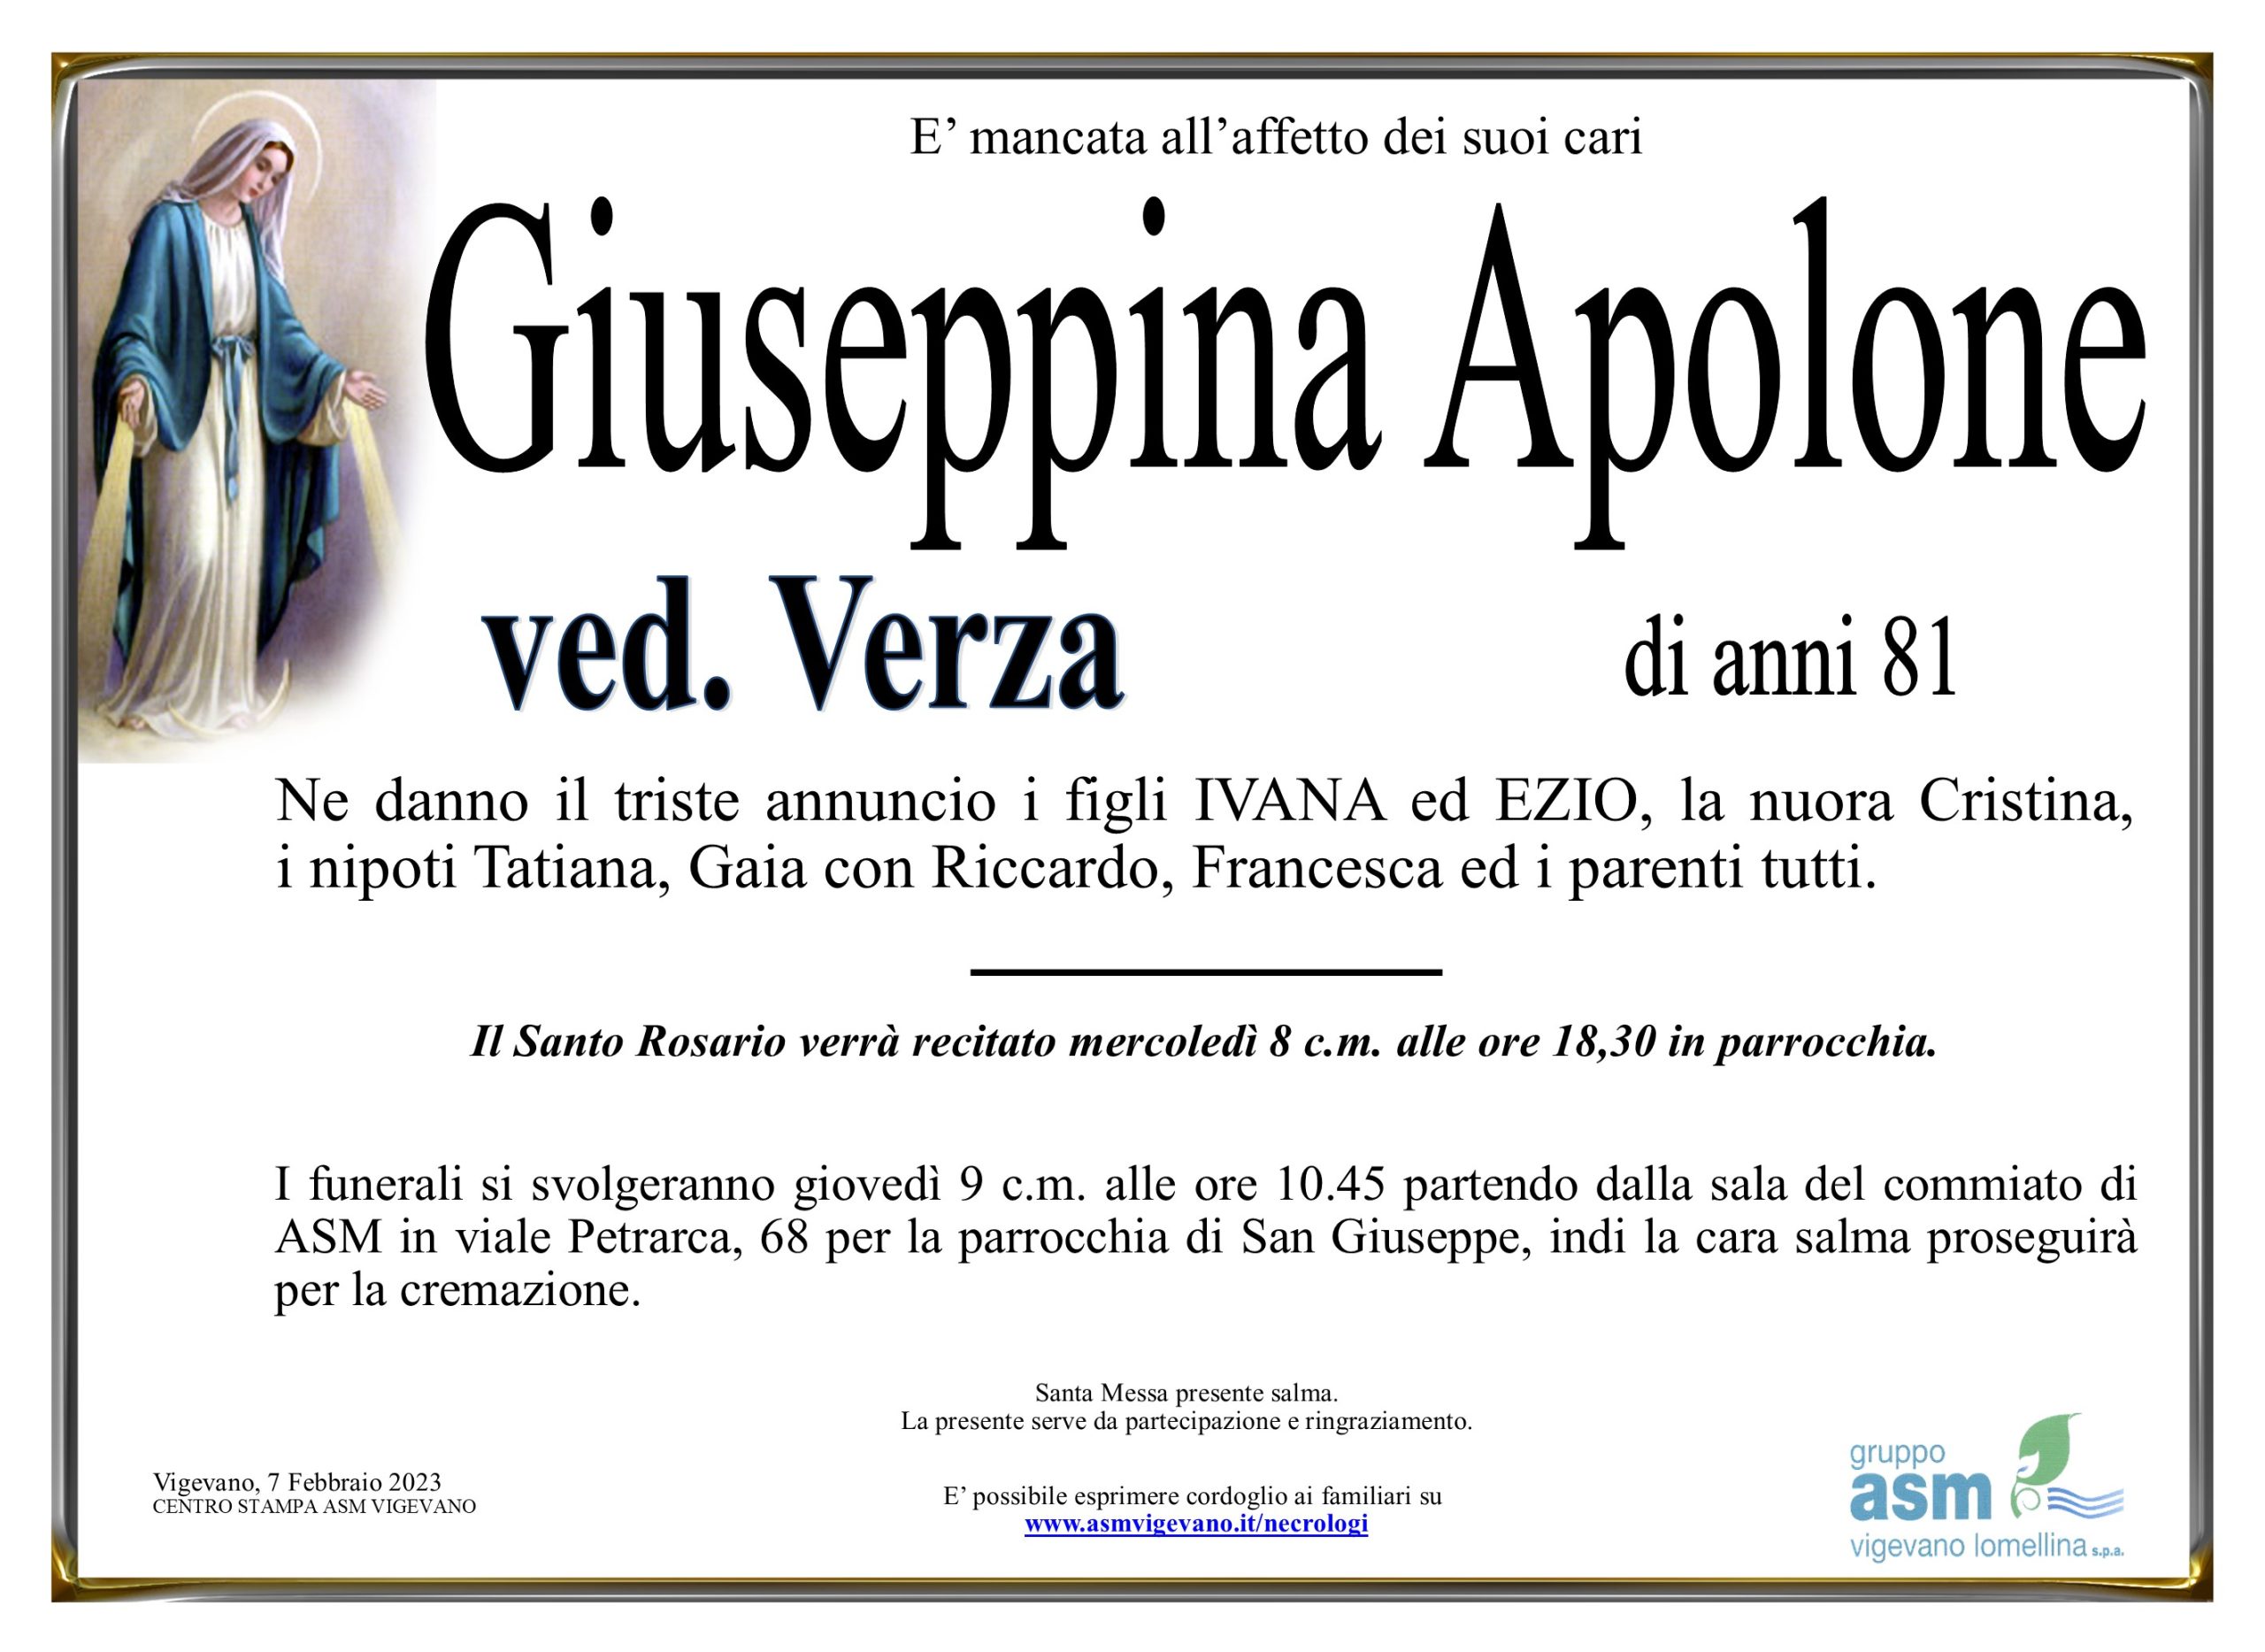 Giuseppina Apolone